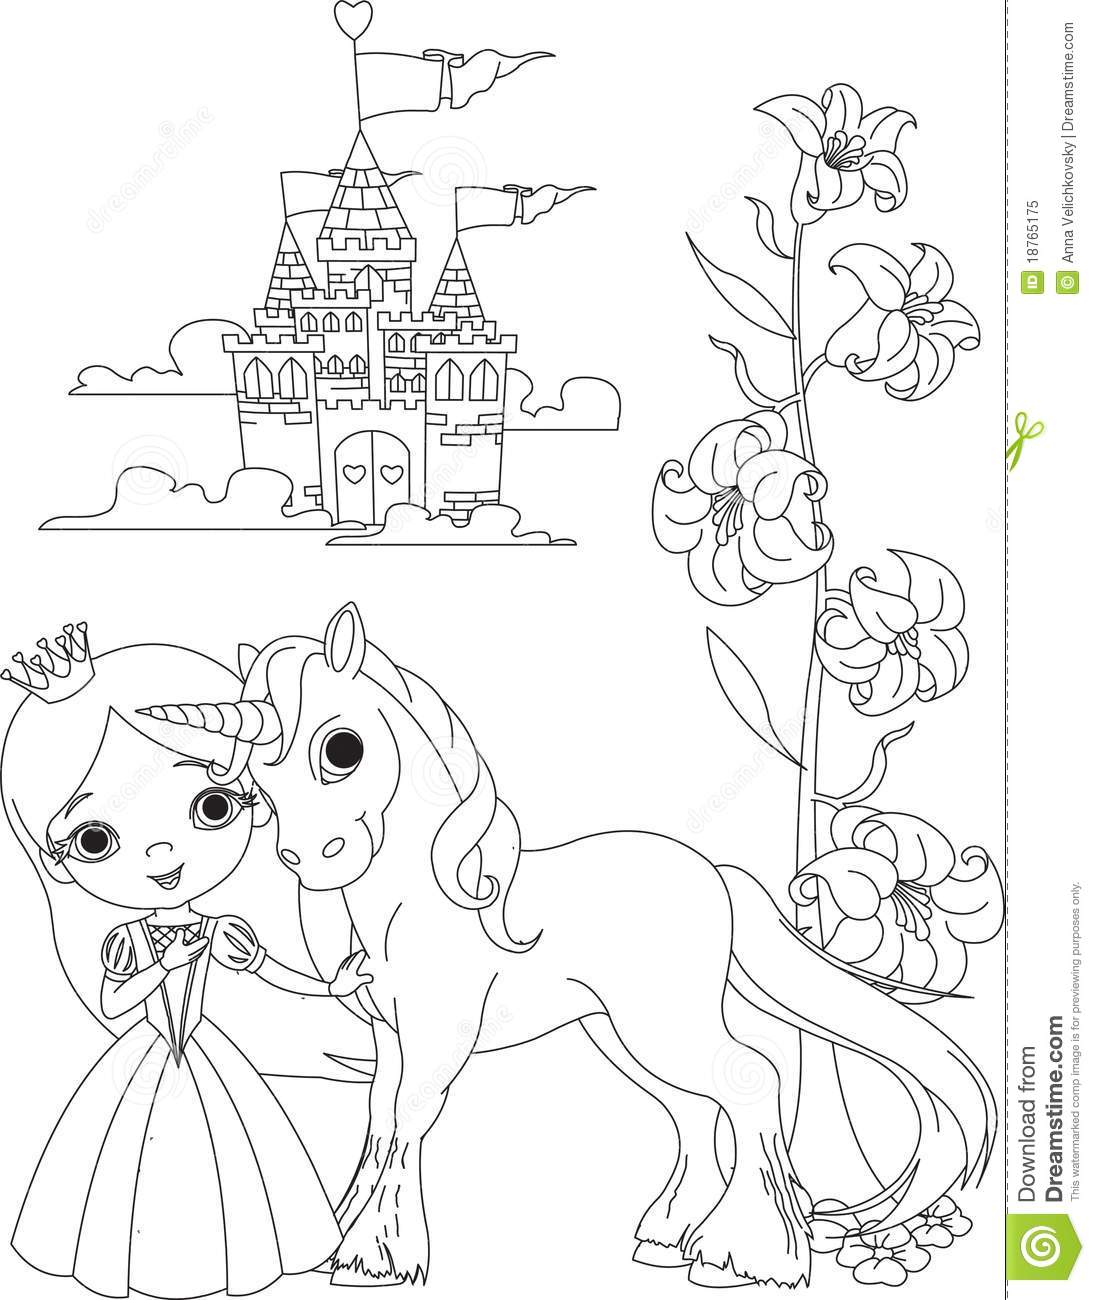 coloriage licorne princesse à imprimer gratuit de la catégorie coloriage licorne